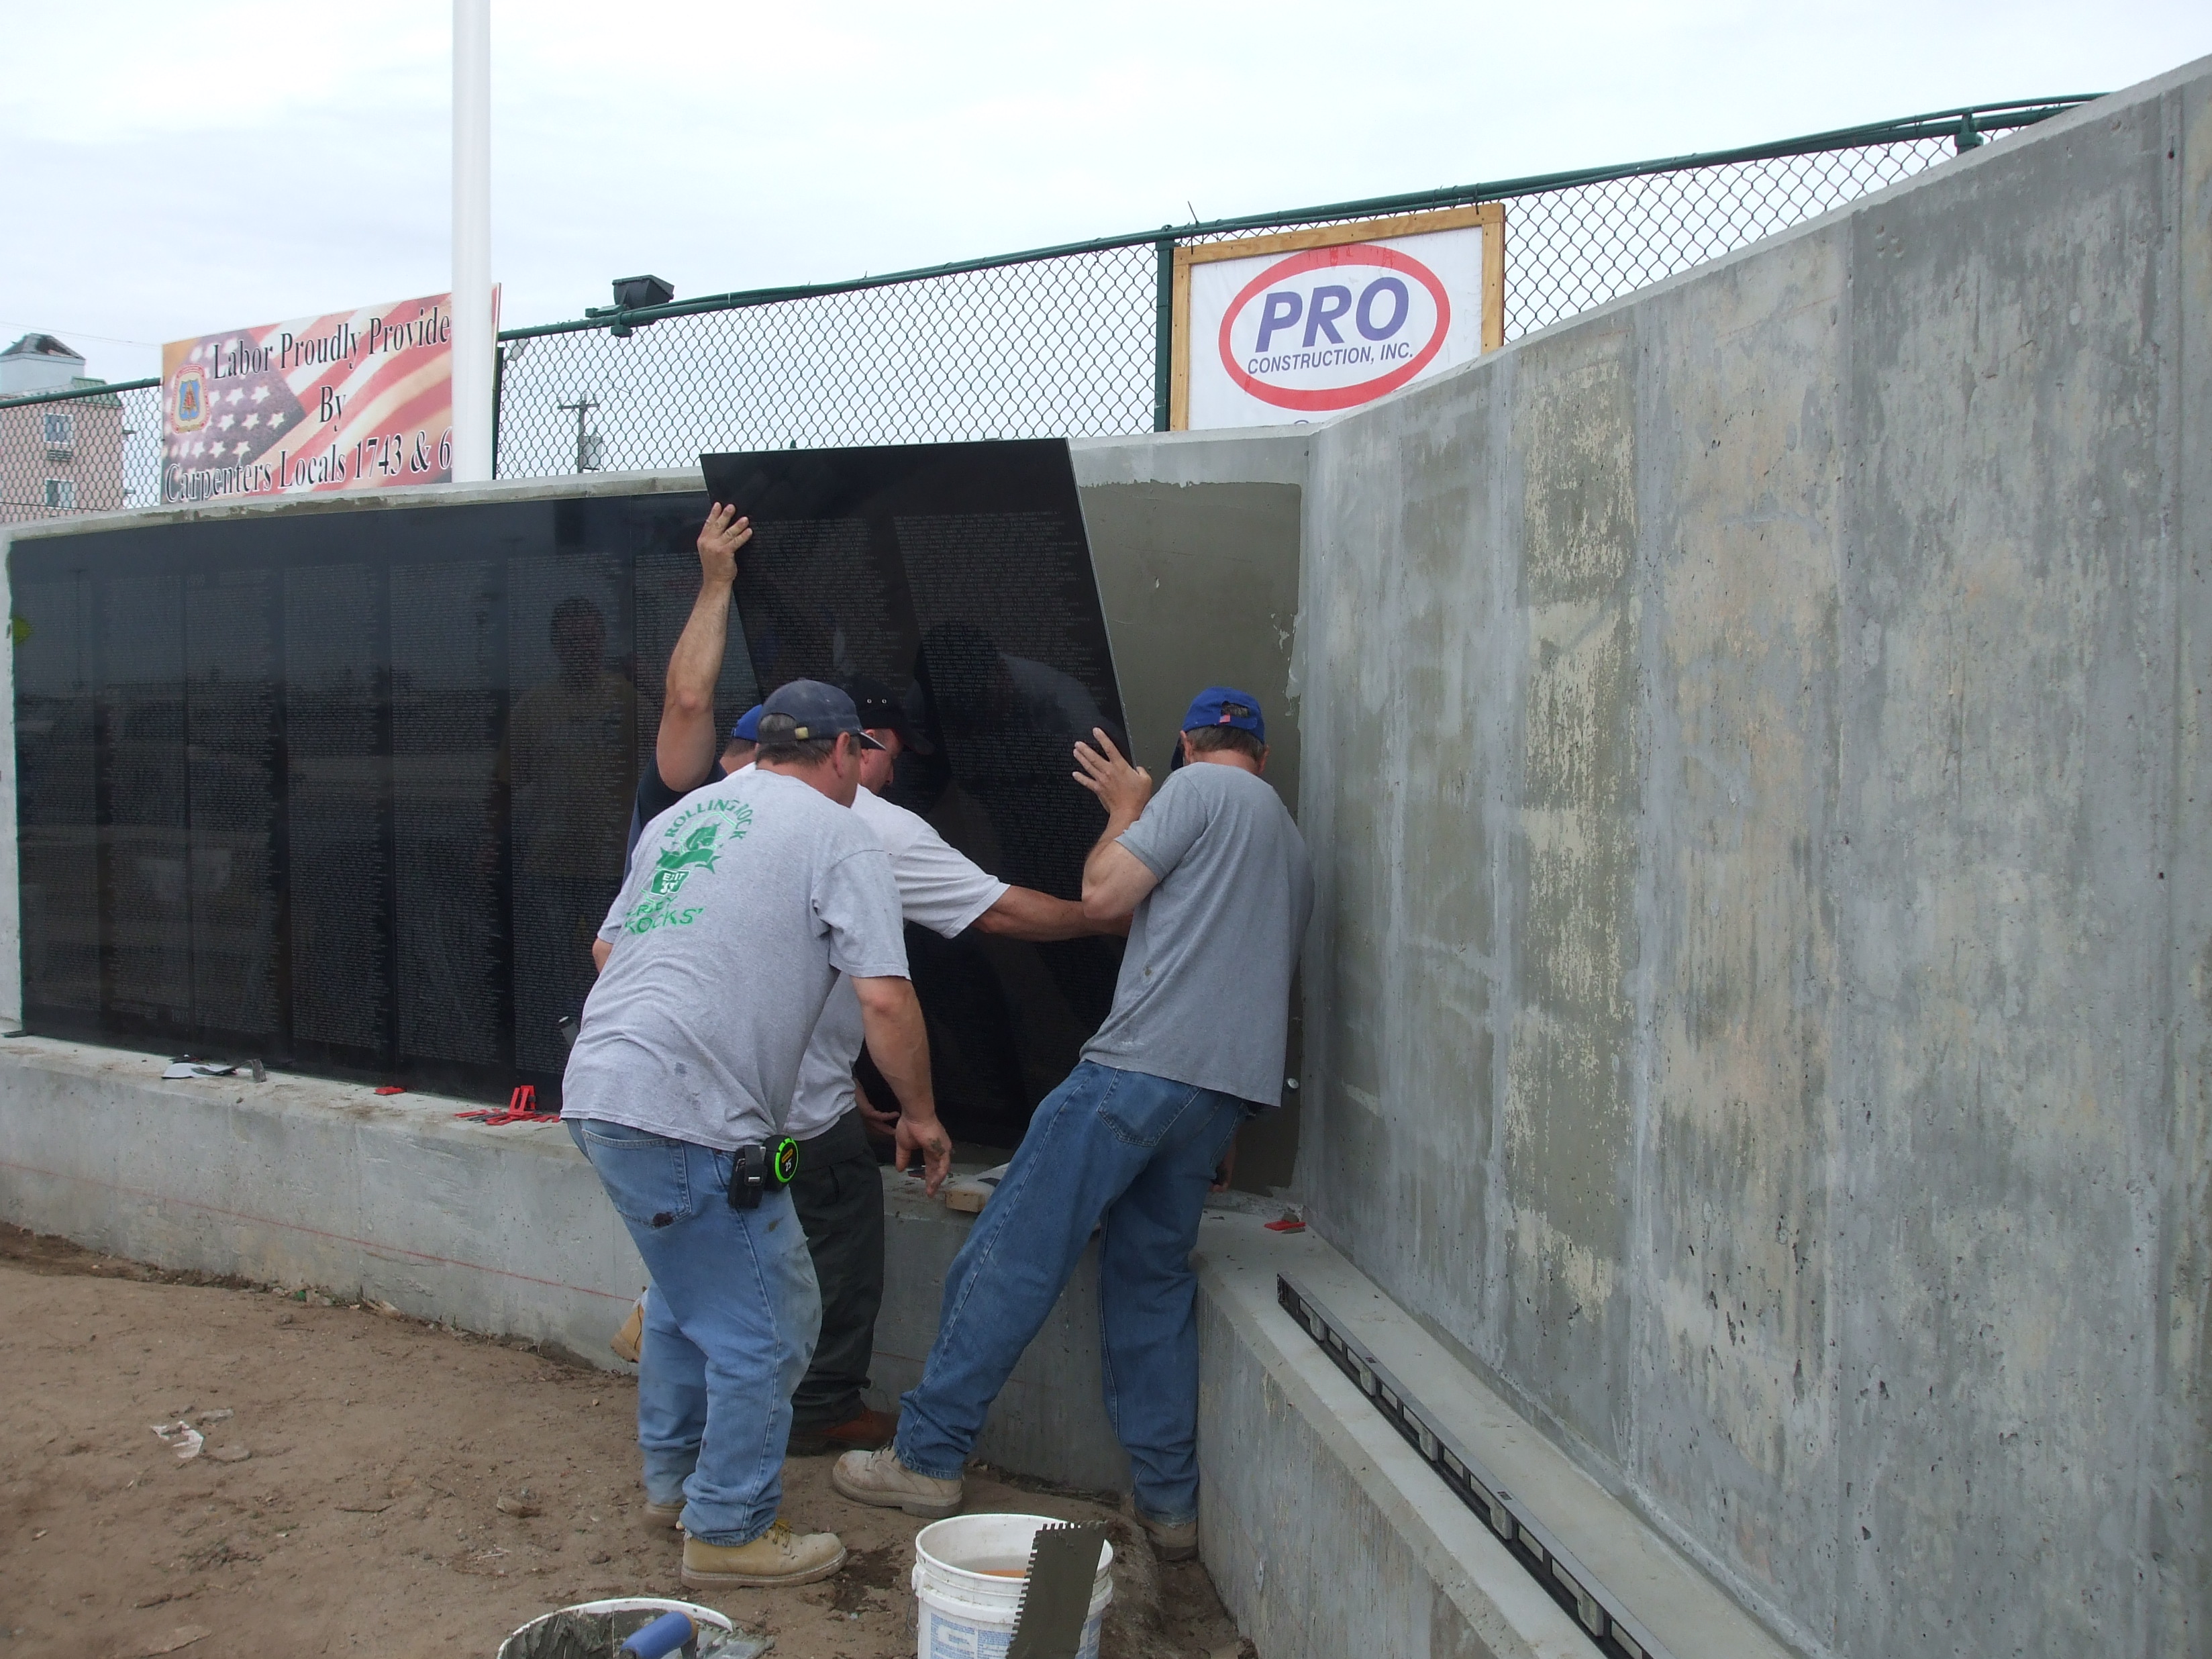 Crews erecting the wall